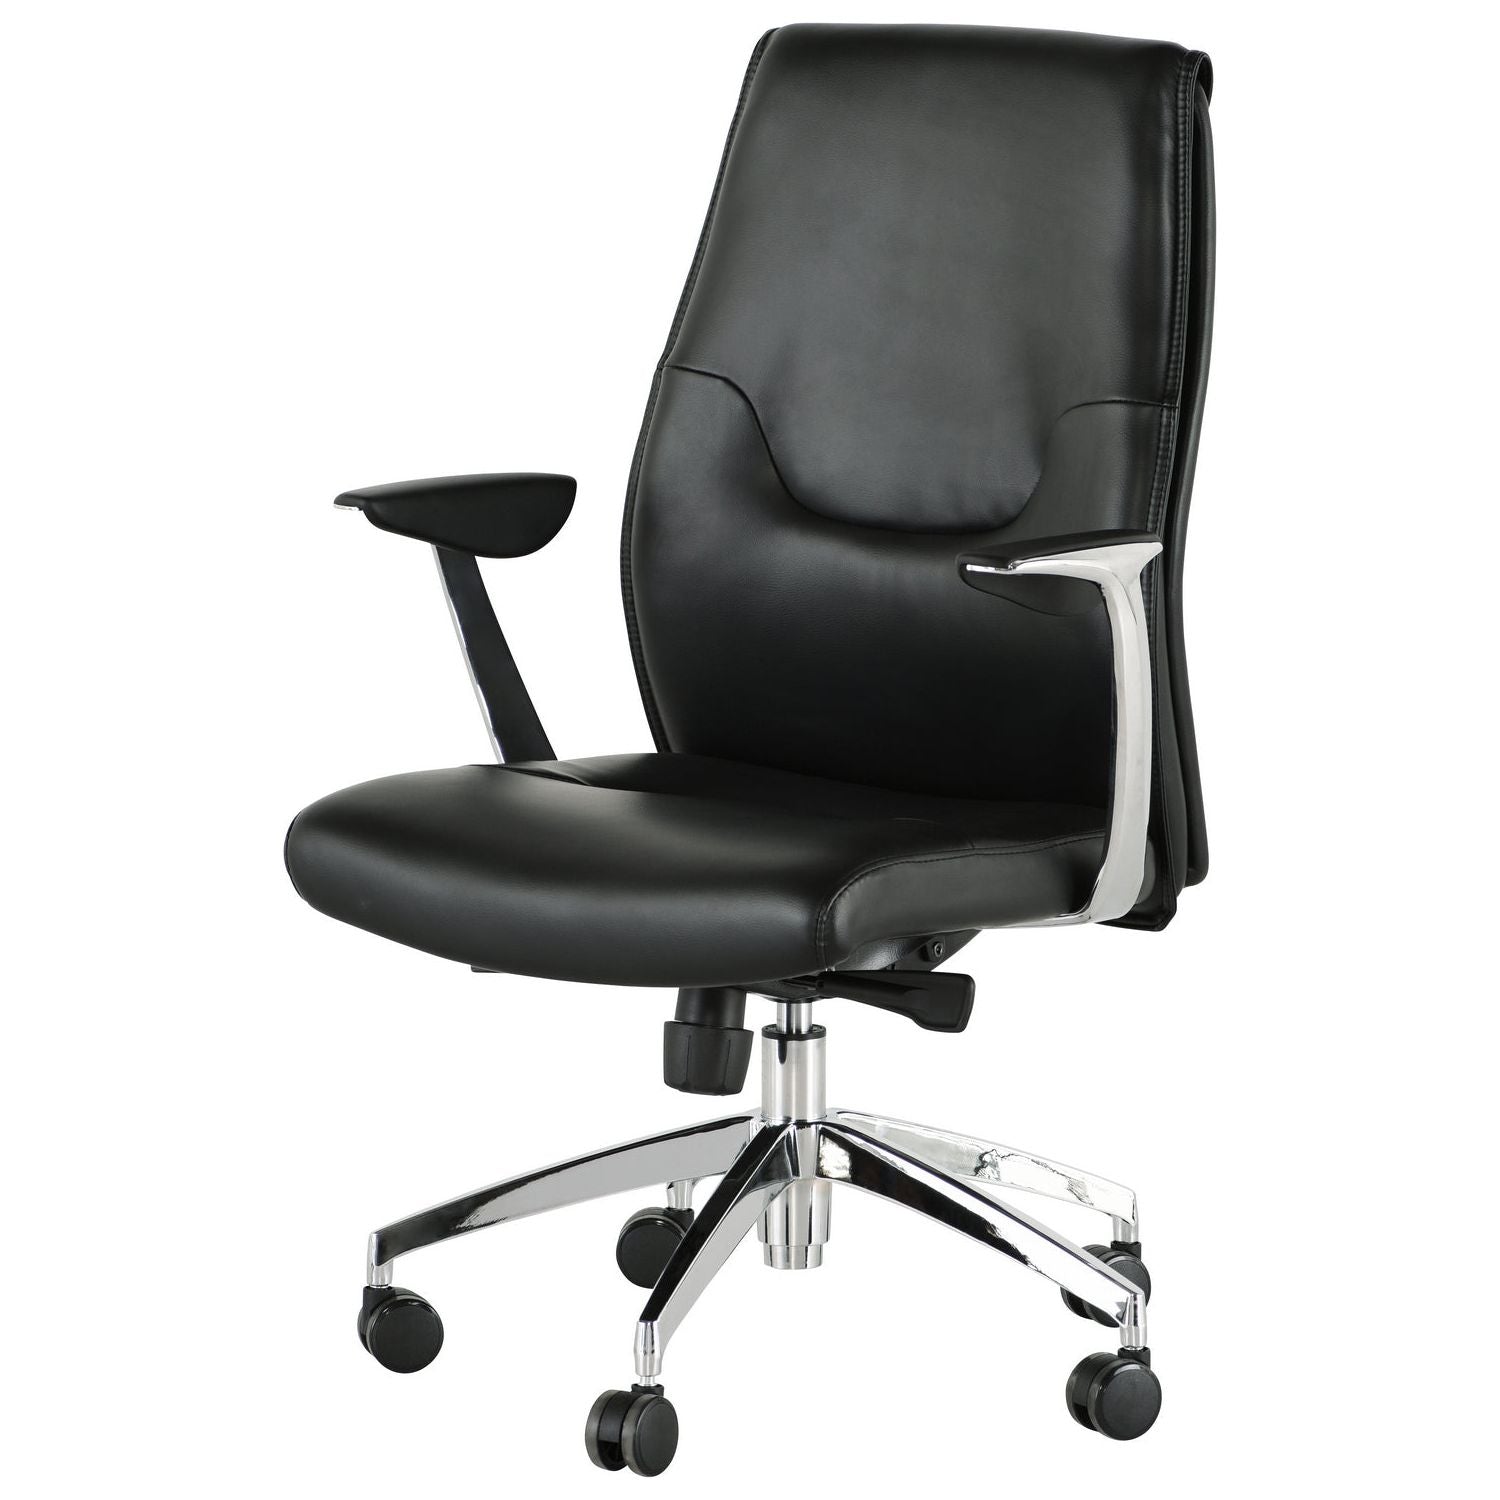 Nuevo Living - HGJL389 - Office Chair - Klause - Black